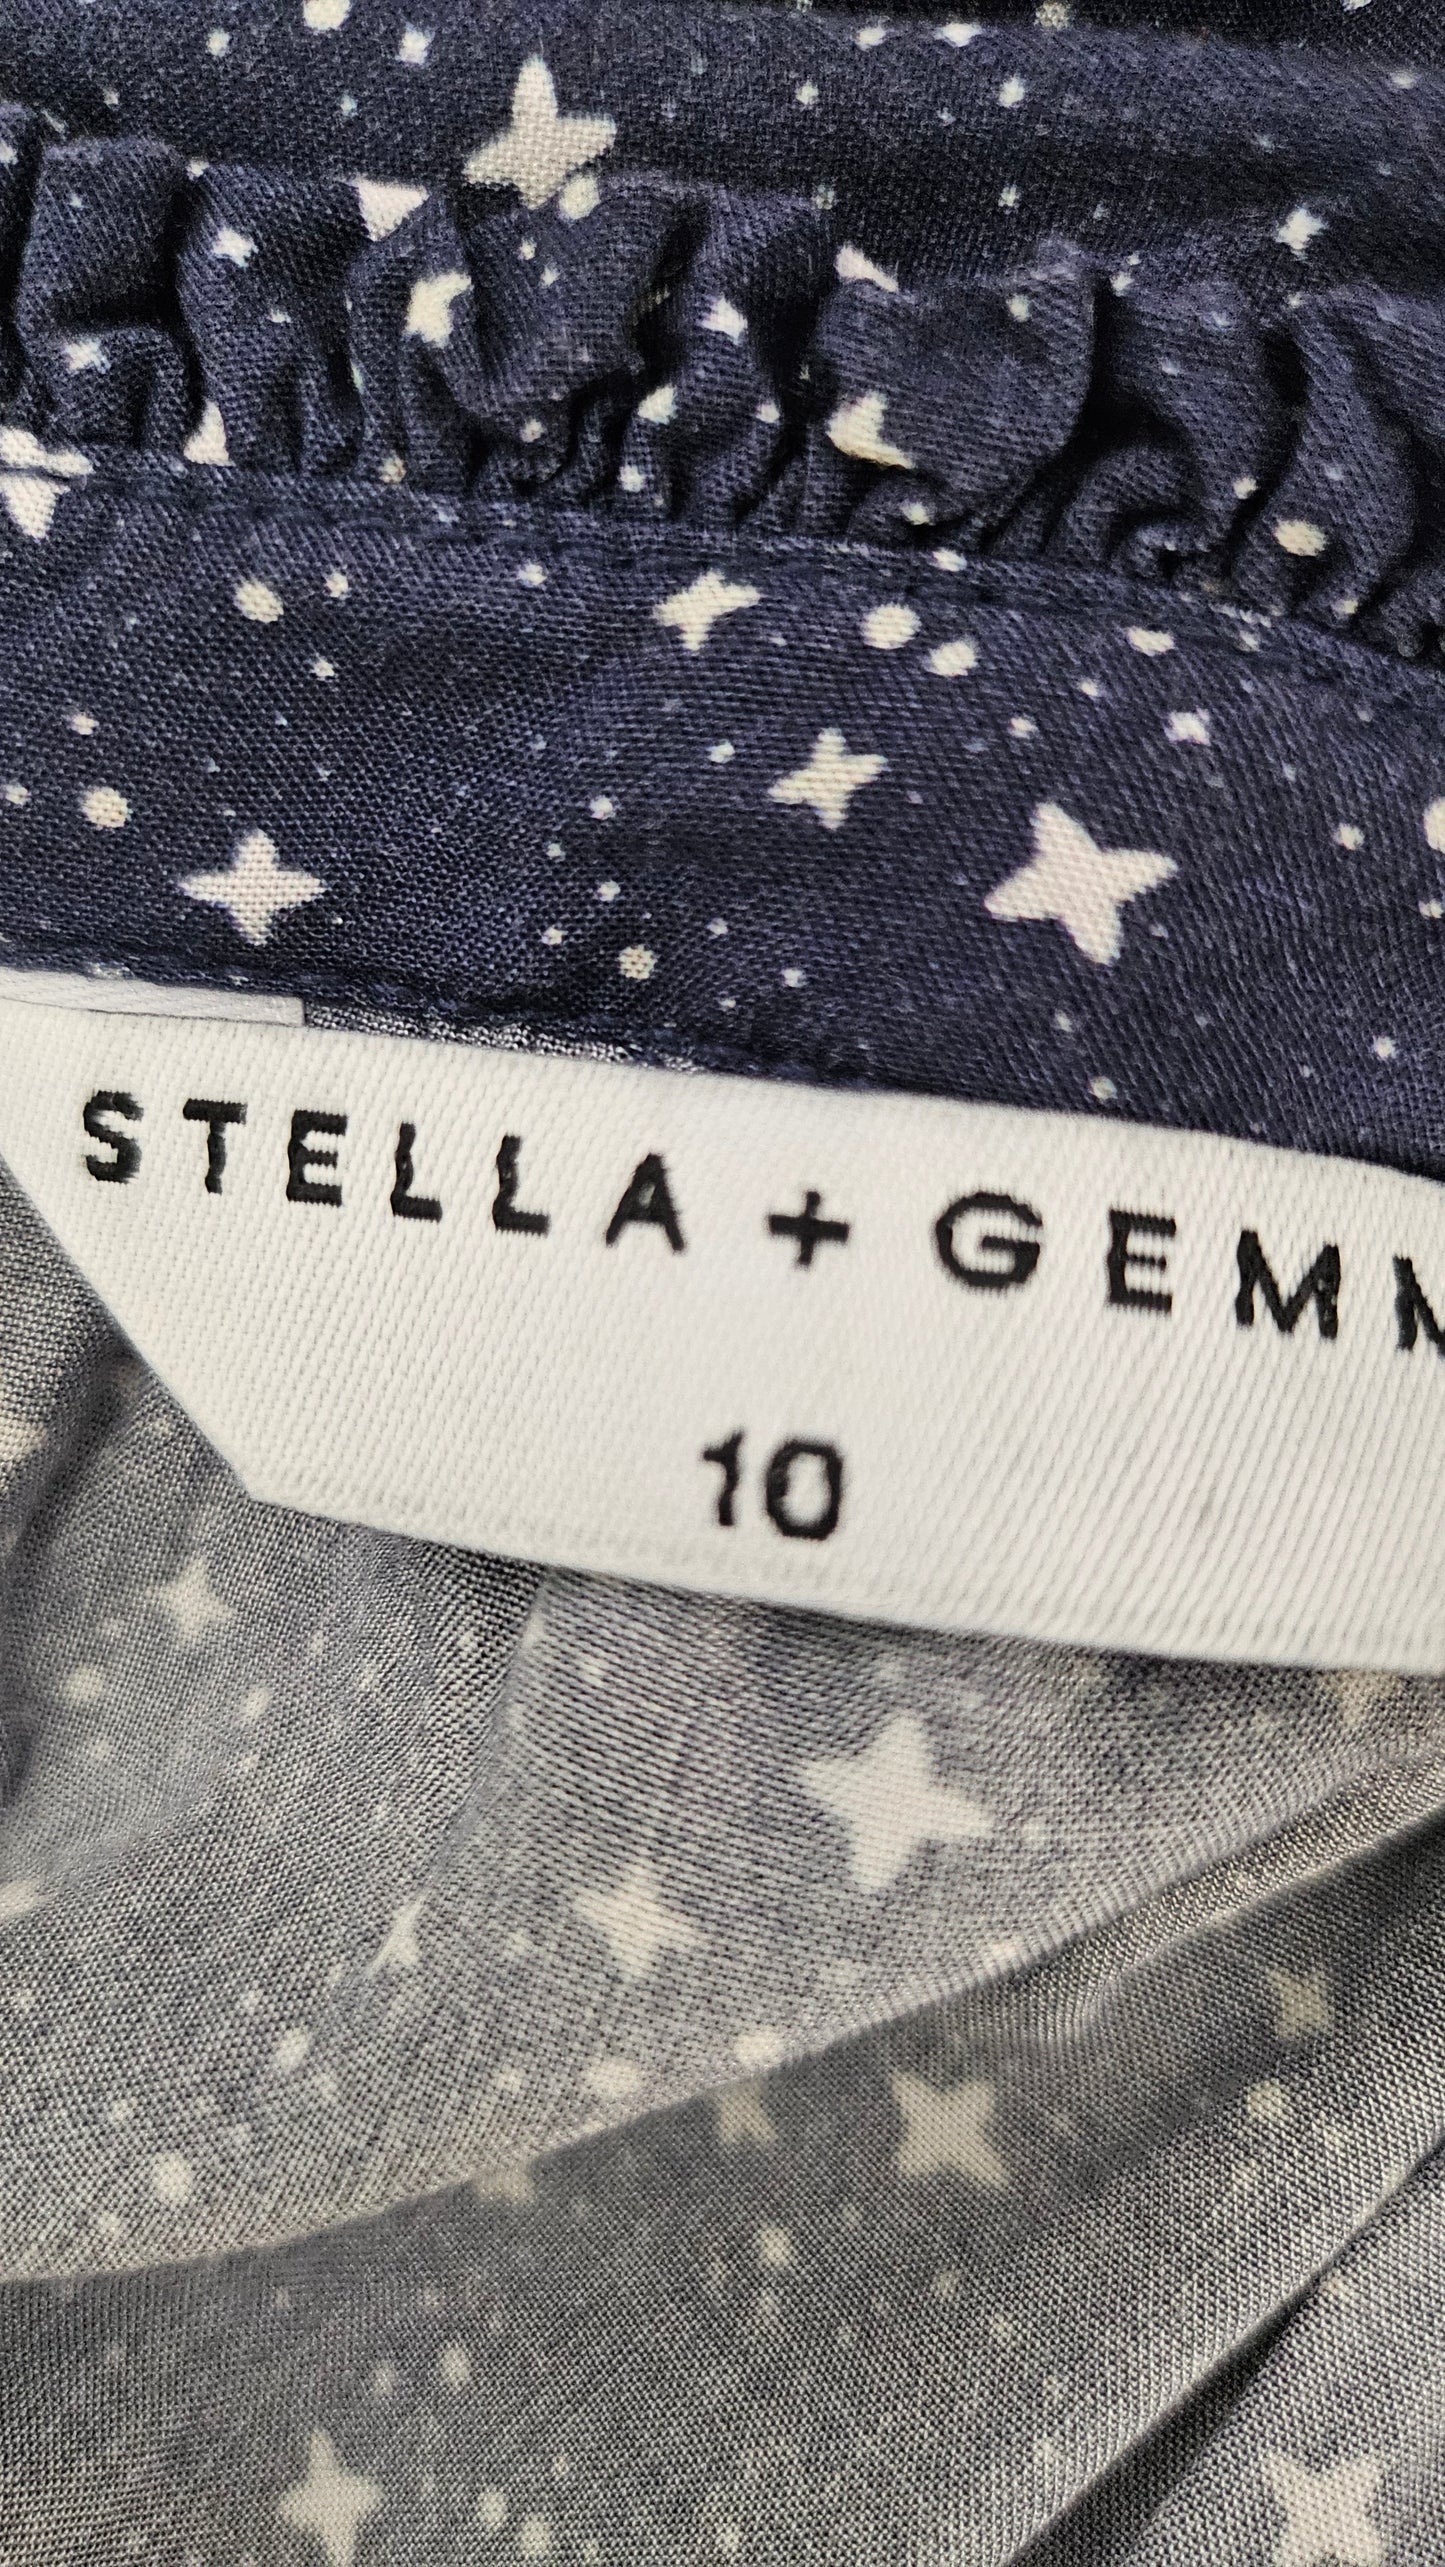 Stella+Gemma Blue Long Sleeve Top (10)